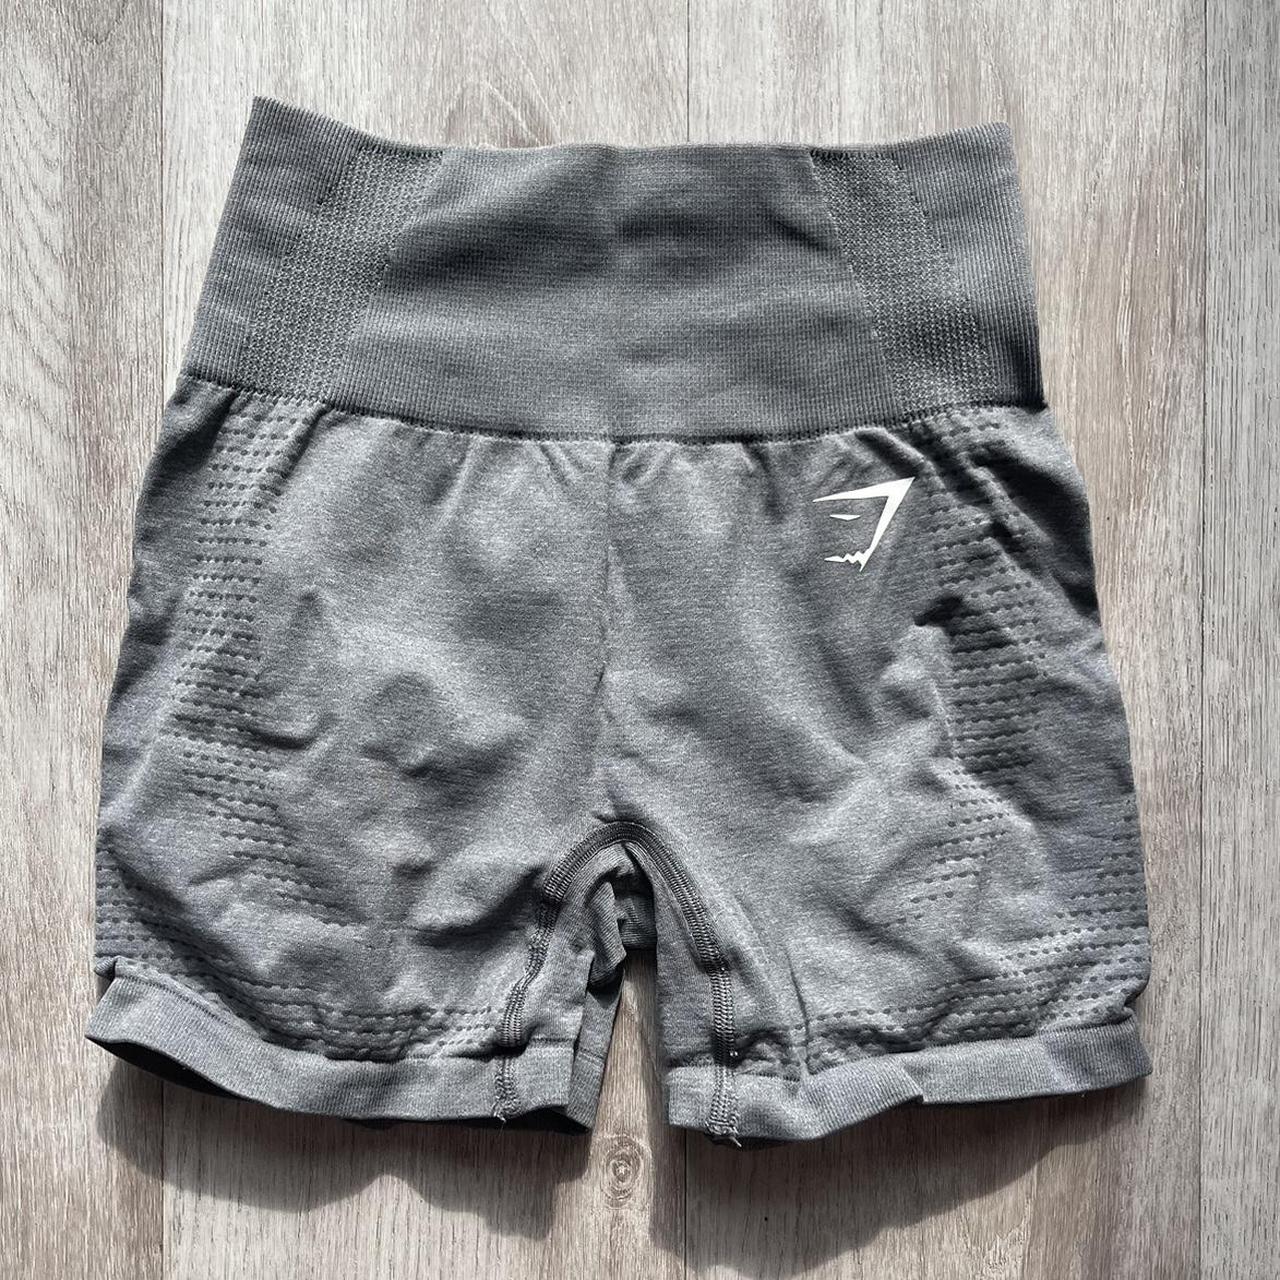 Vital Seamless 2.0 Shorts